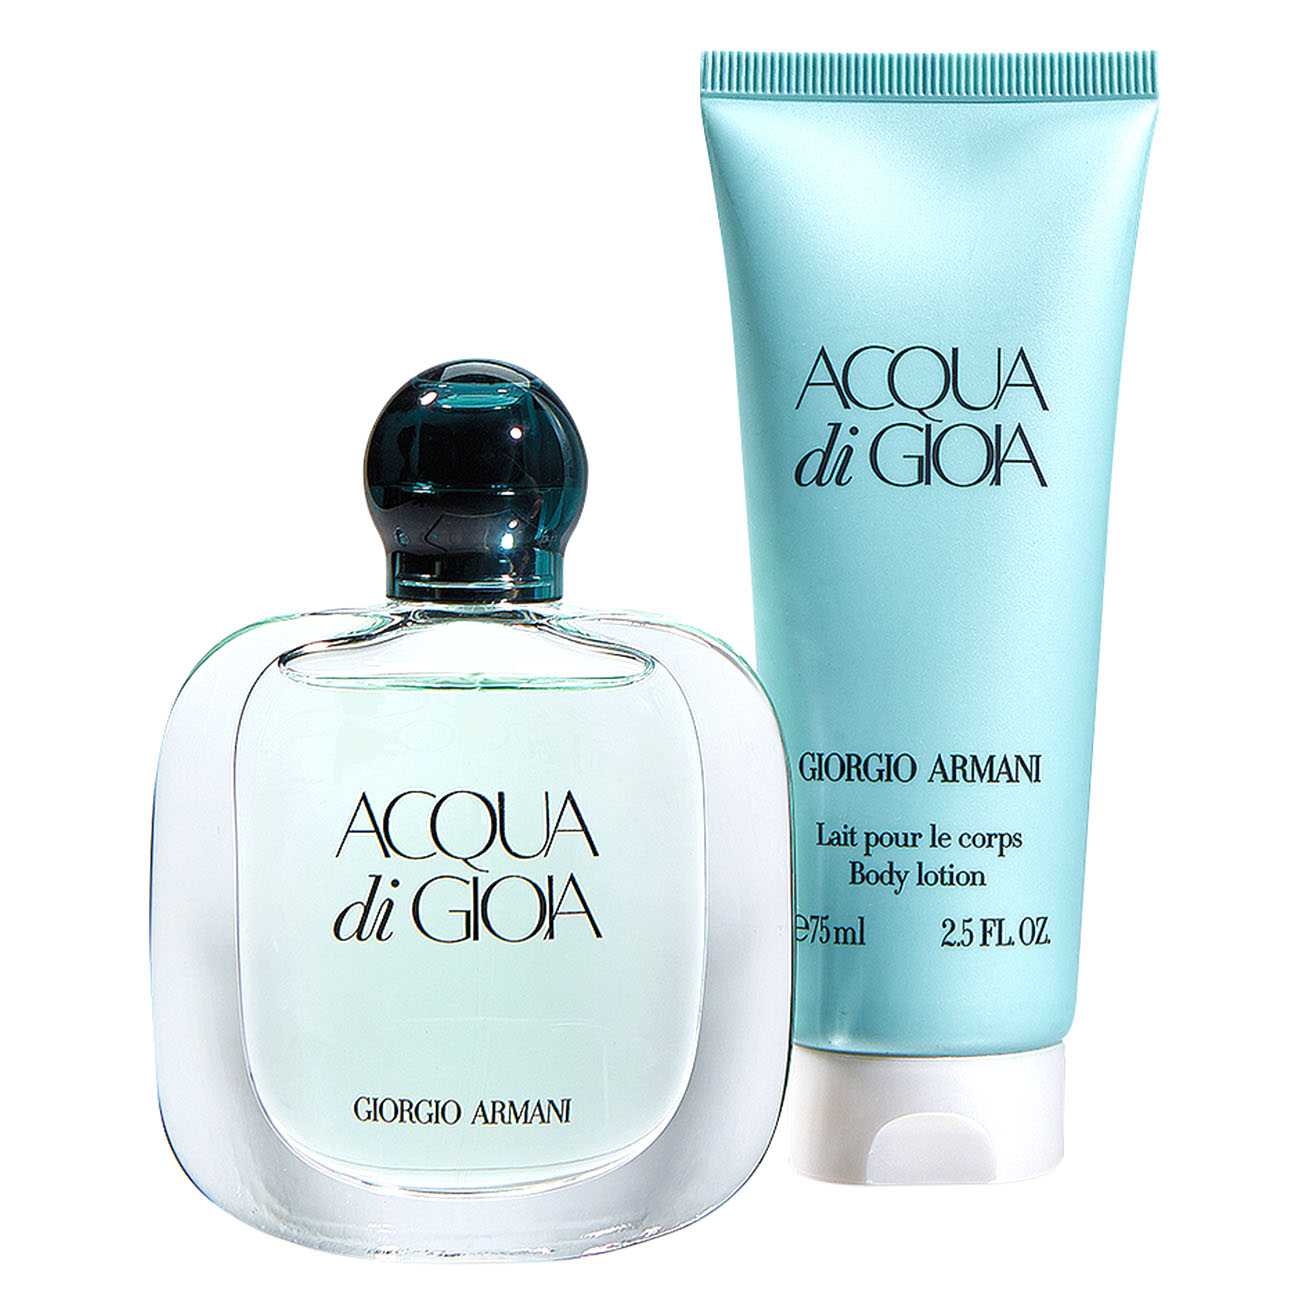 Set parfumuri Giorgio Armani ACQUA DI GIOIA 175 ML 175ml cu comanda online